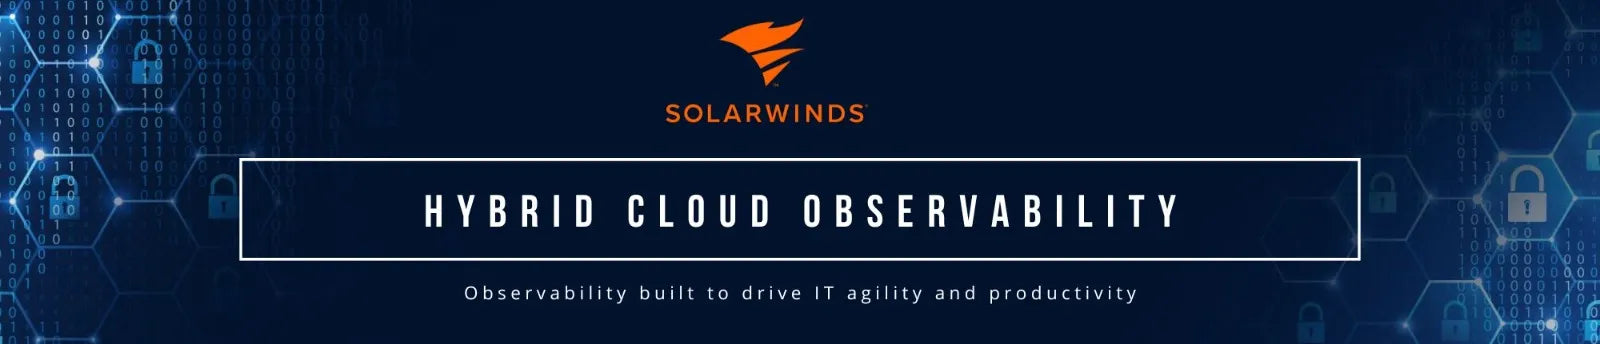 SolarWinds Hybrid Cloud Observability